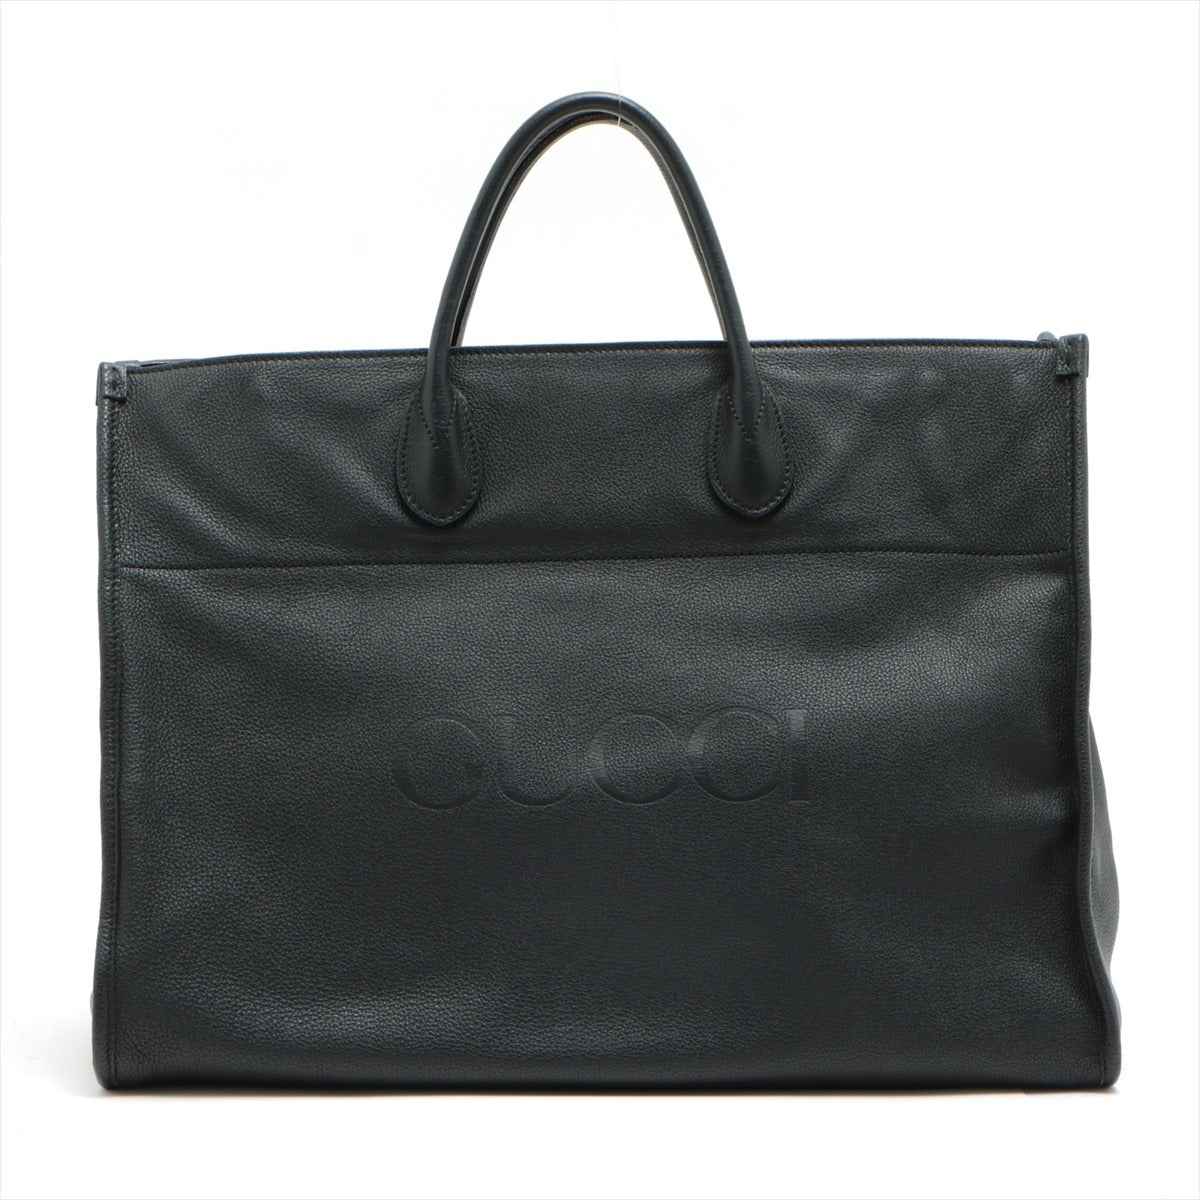 Gucci Logo Leather 2way handbag Black 674837